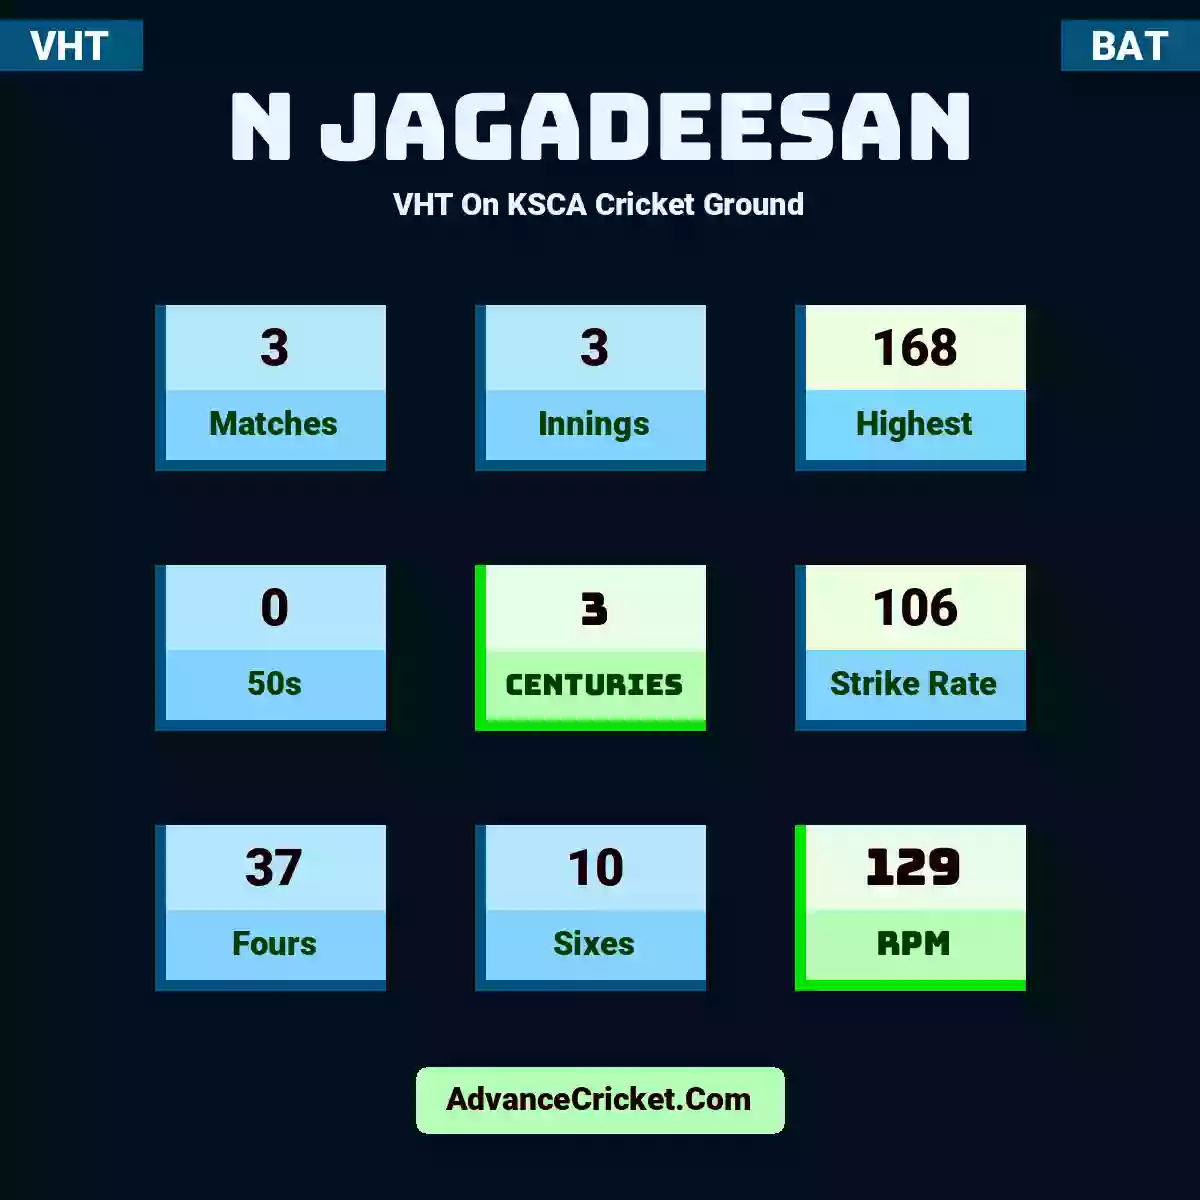 N Jagadeesan VHT  On KSCA Cricket Ground, N Jagadeesan played 3 matches, scored 168 runs as highest, 0 half-centuries, and 3 centuries, with a strike rate of 106. N.Jagadeesan hit 37 fours and 10 sixes, with an RPM of 129.